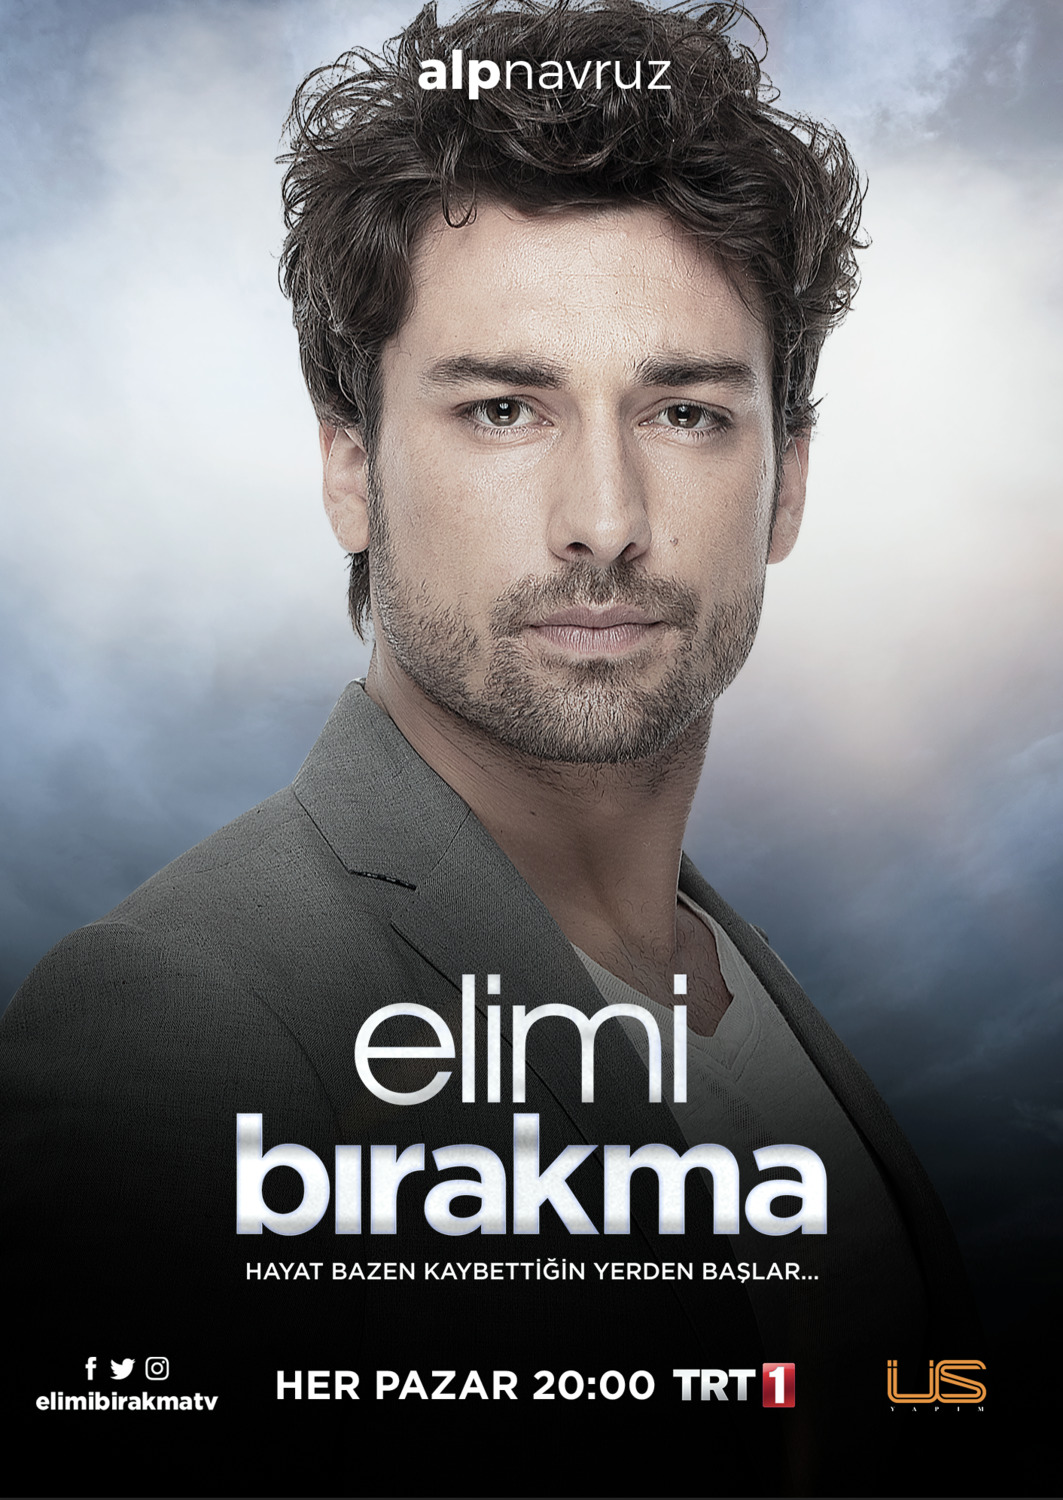 Extra Large Movie Poster Image for Elimi birakma (#20 of 20)